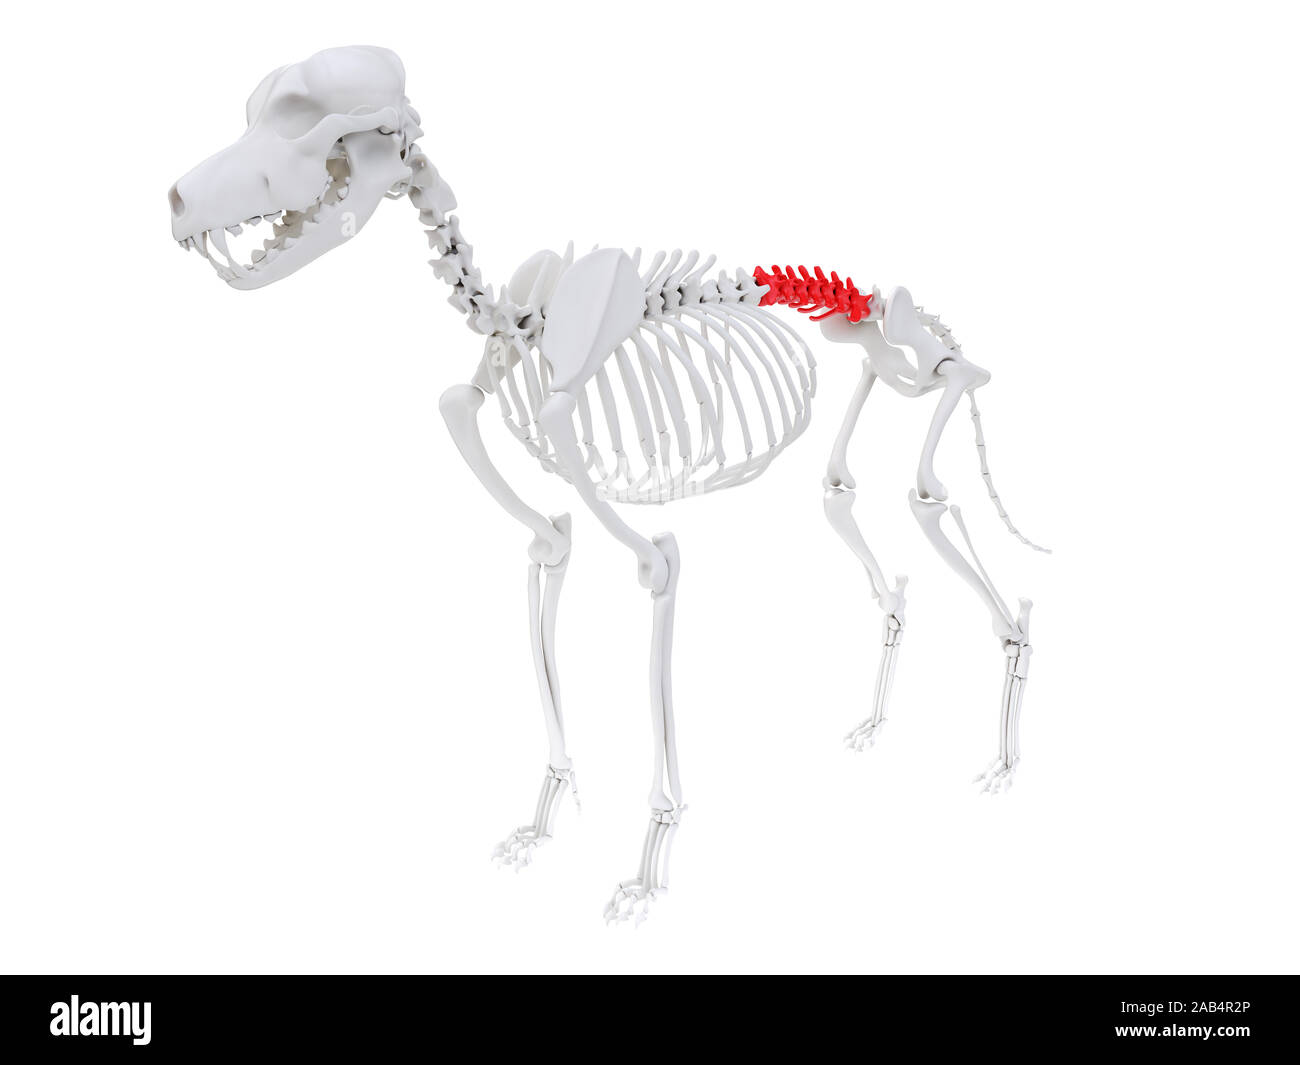 3d rendered anatomy illustration of the dog skeletal anatomy - lumbar spine Stock Photo